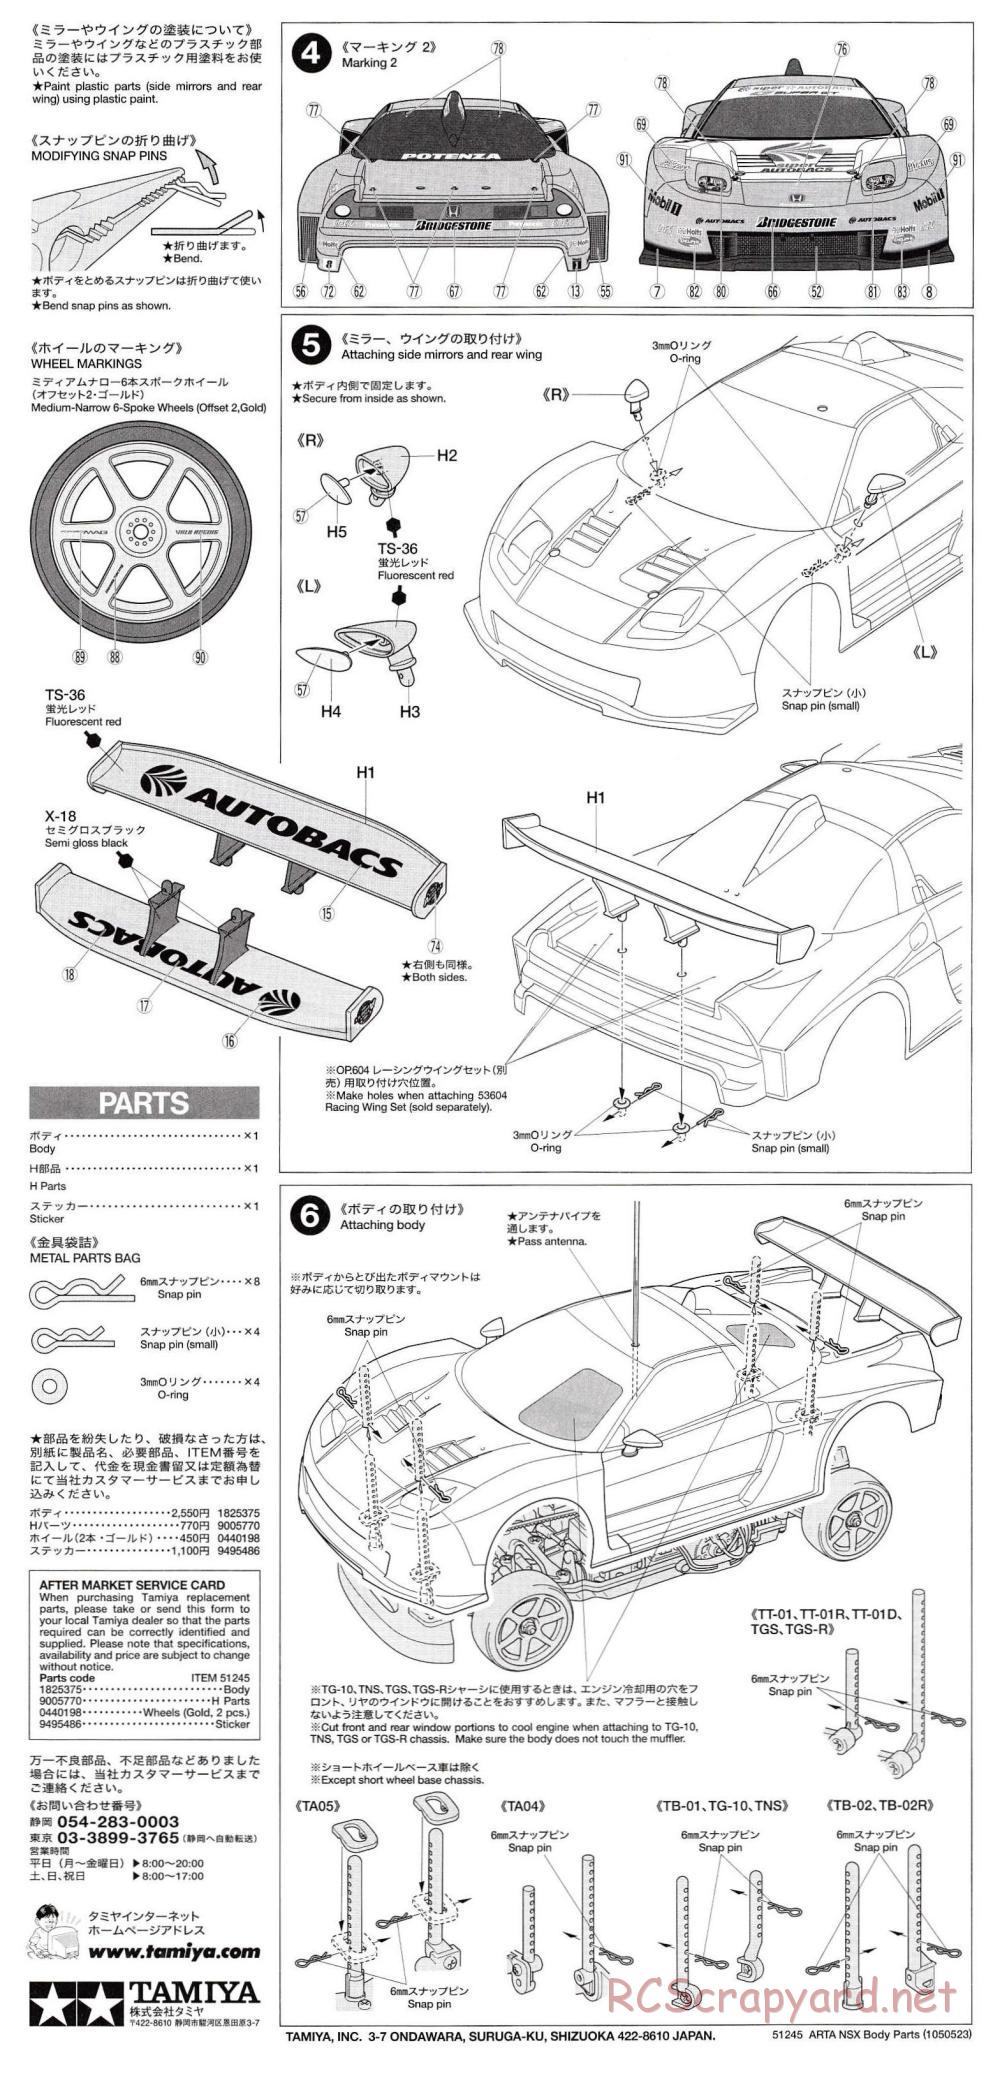 Tamiya - Arta NSX - TA05 Chassis - Body Manual - Page 2